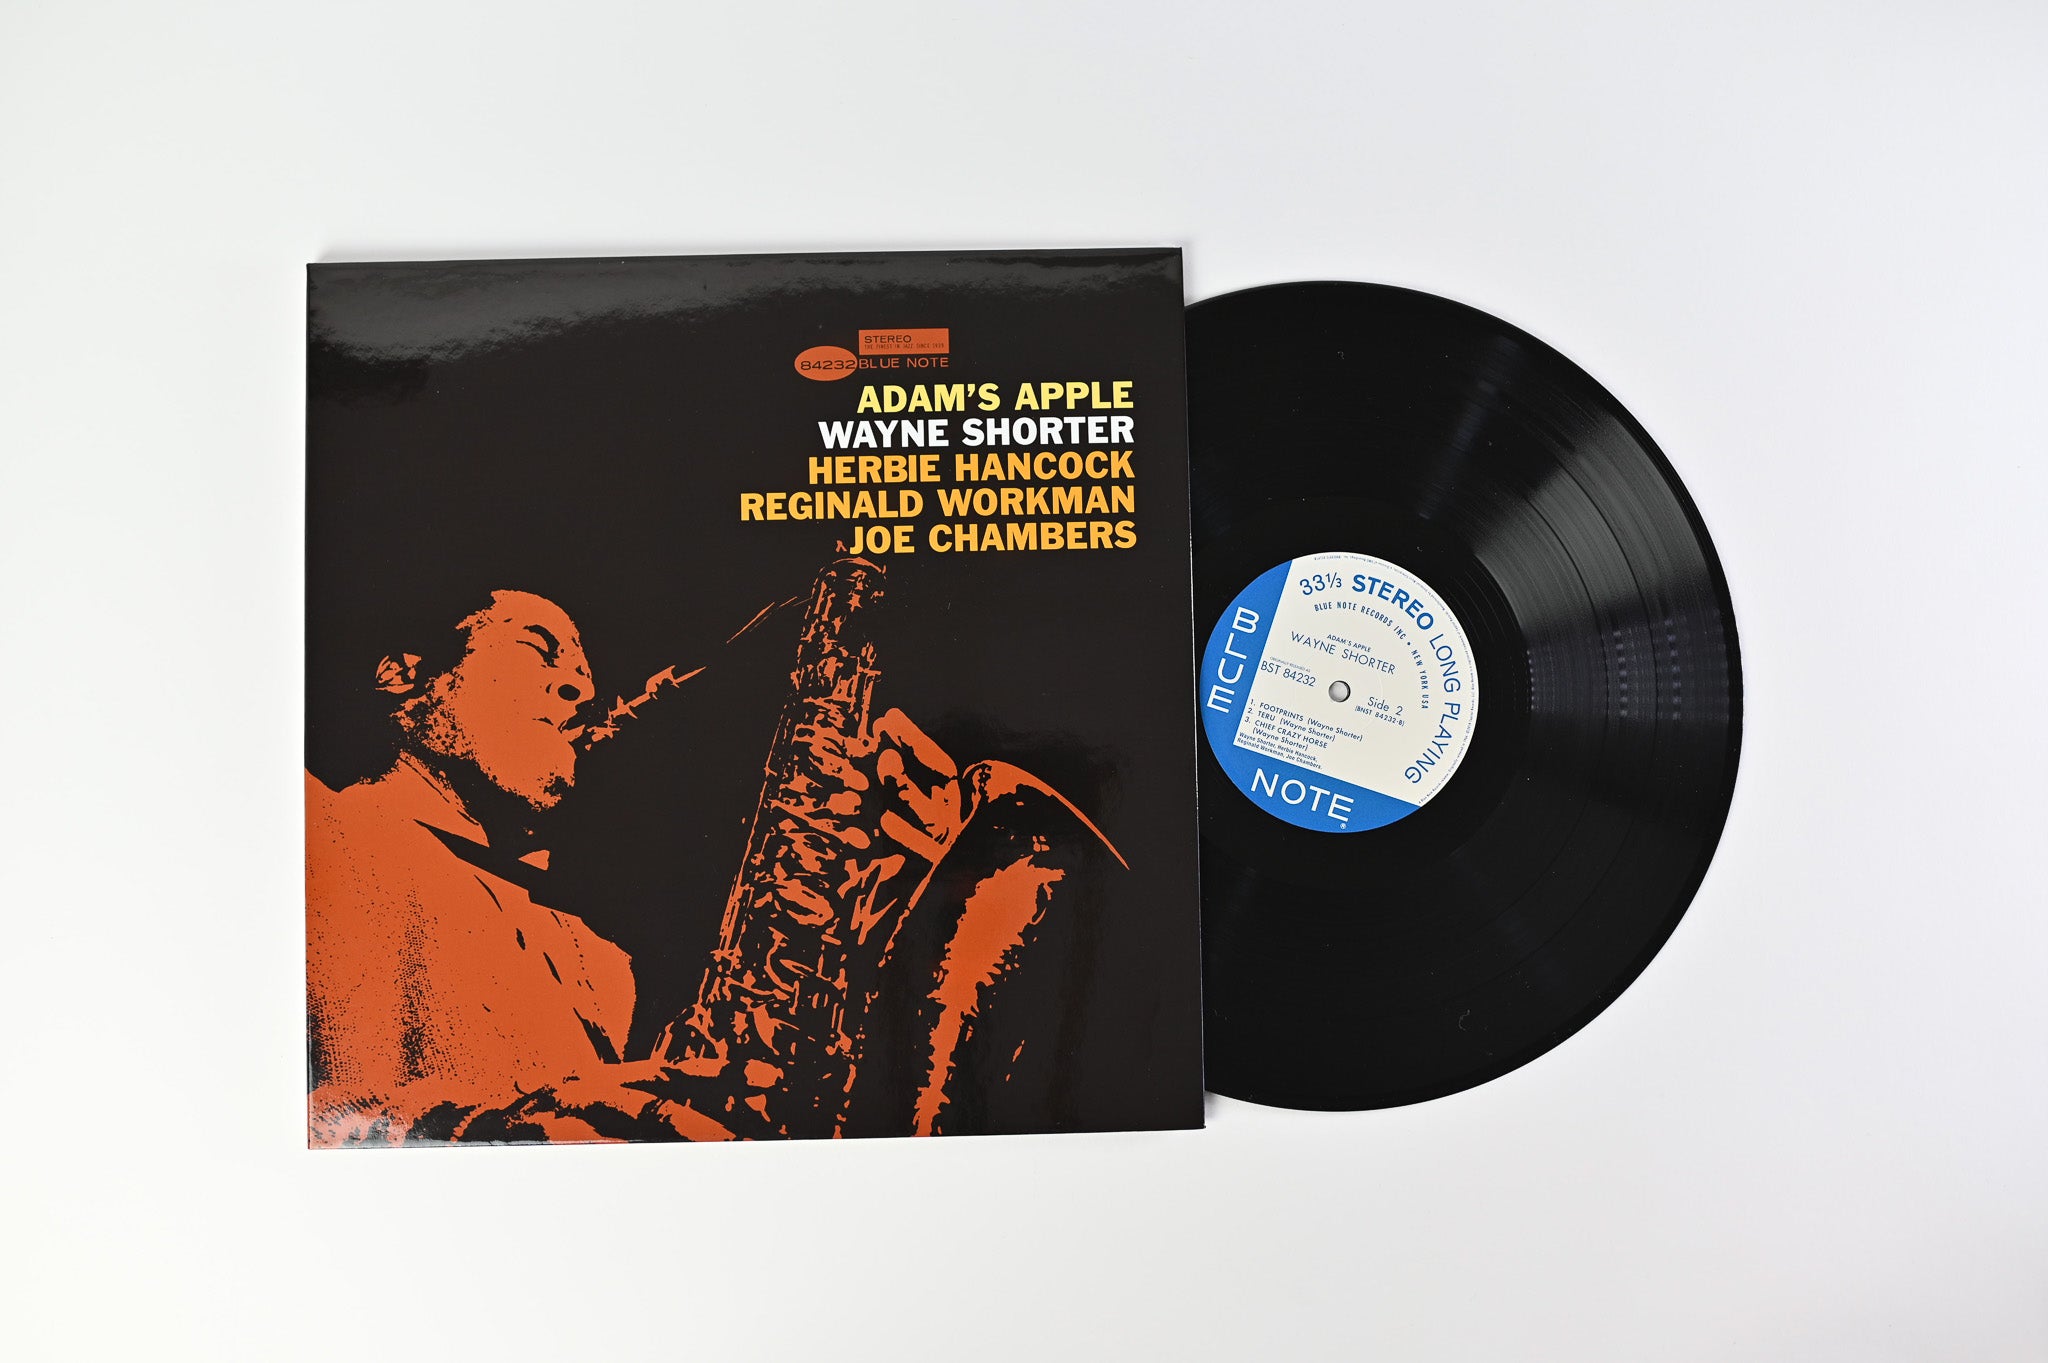 Wayne Shorter - Adam's Apple on Blue Note Music Matters Ltd Reissue on SRX Vinyl